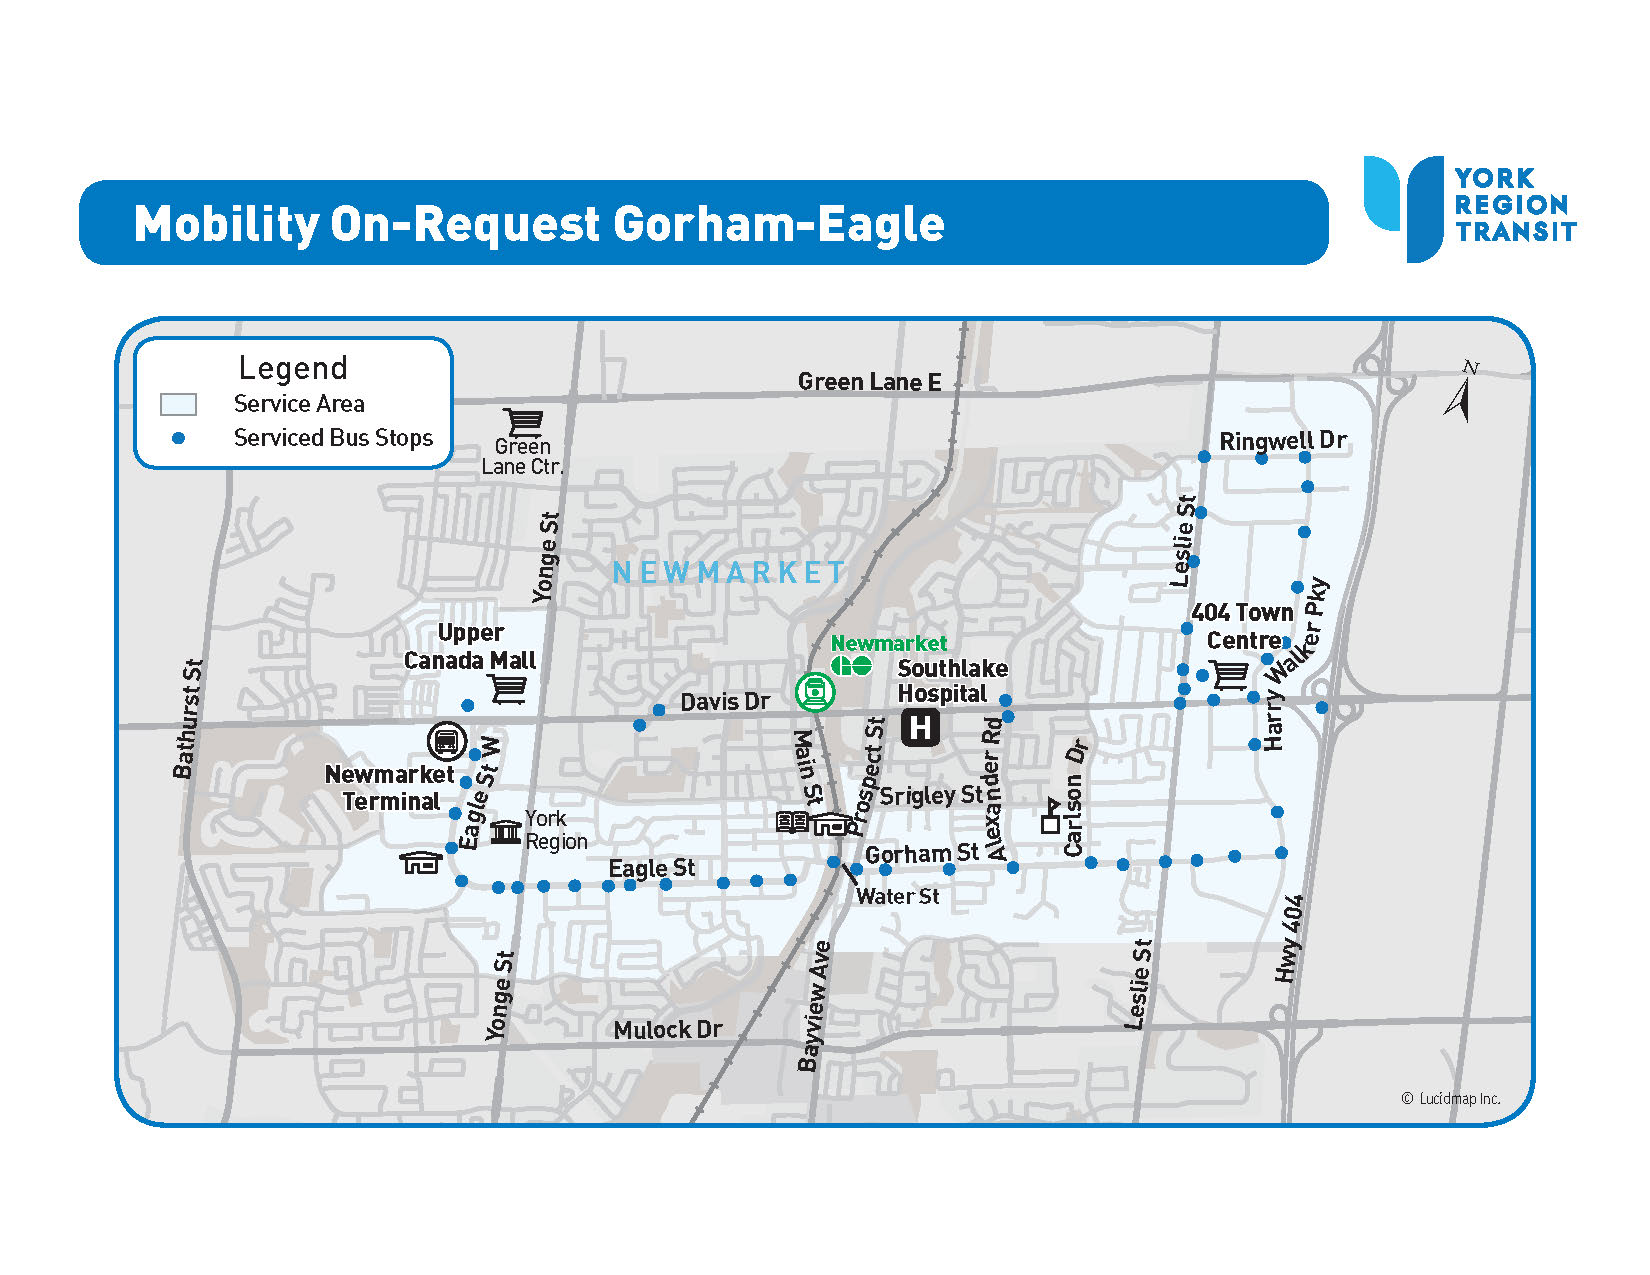 MOR Gorham-Eagle service area map